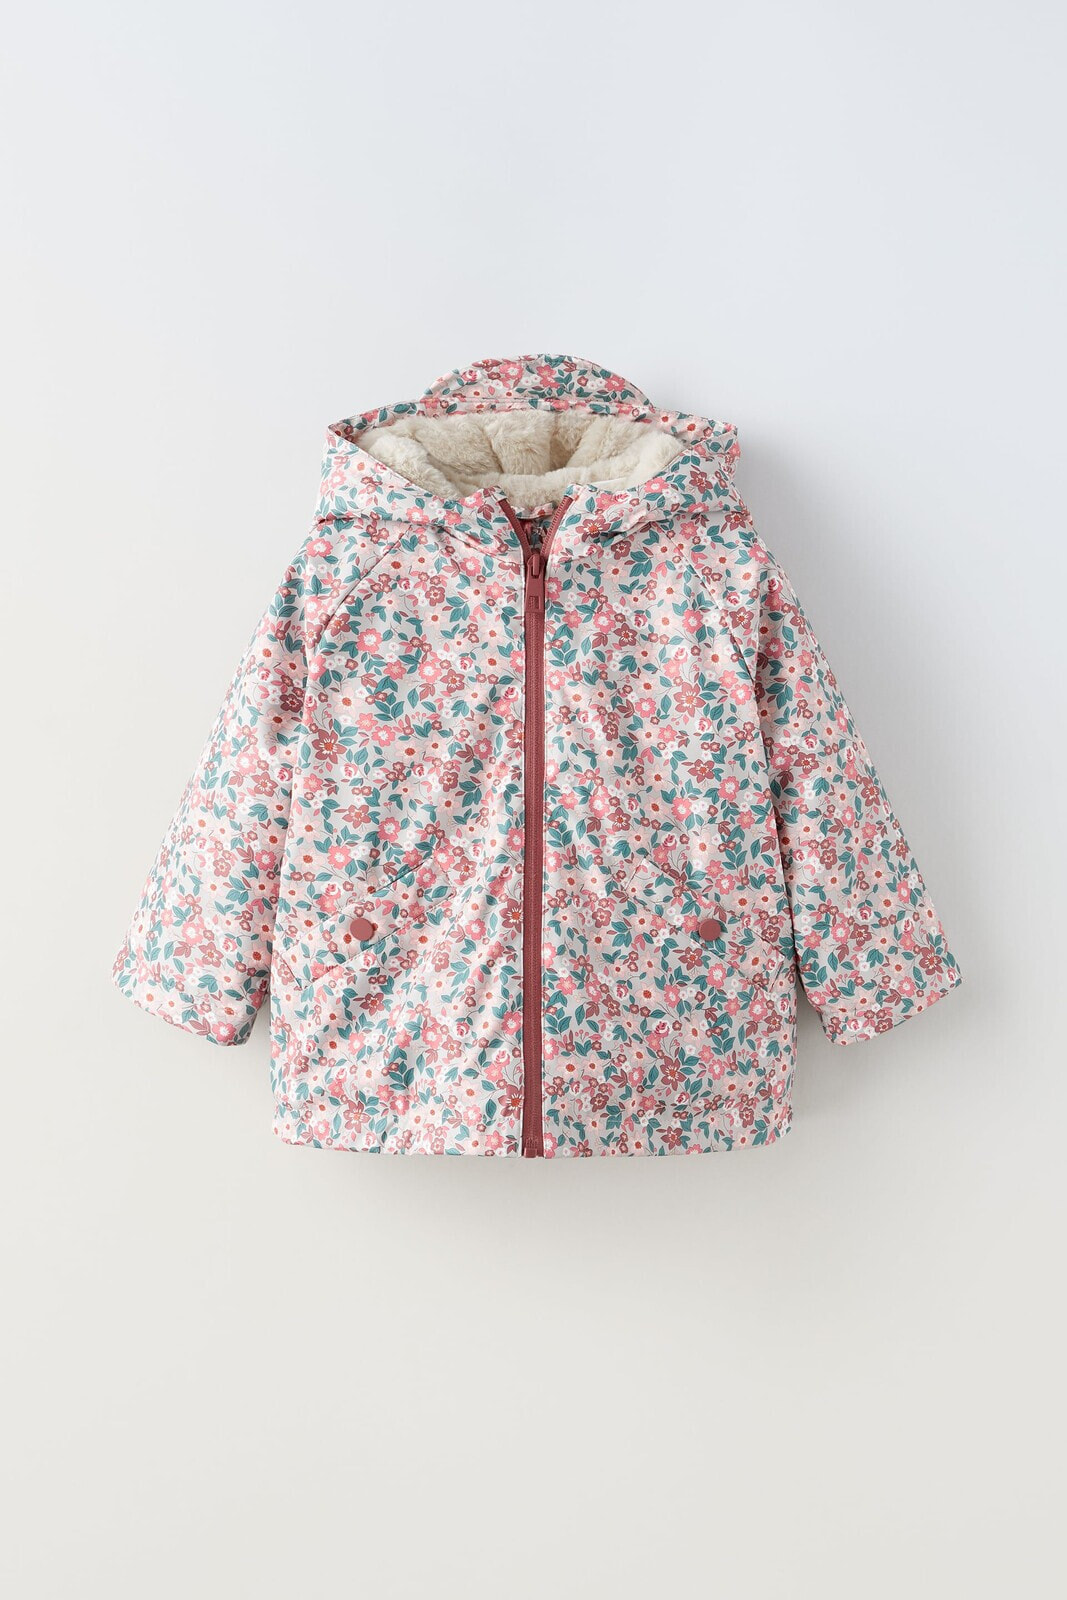 Rubberised floral raincoat